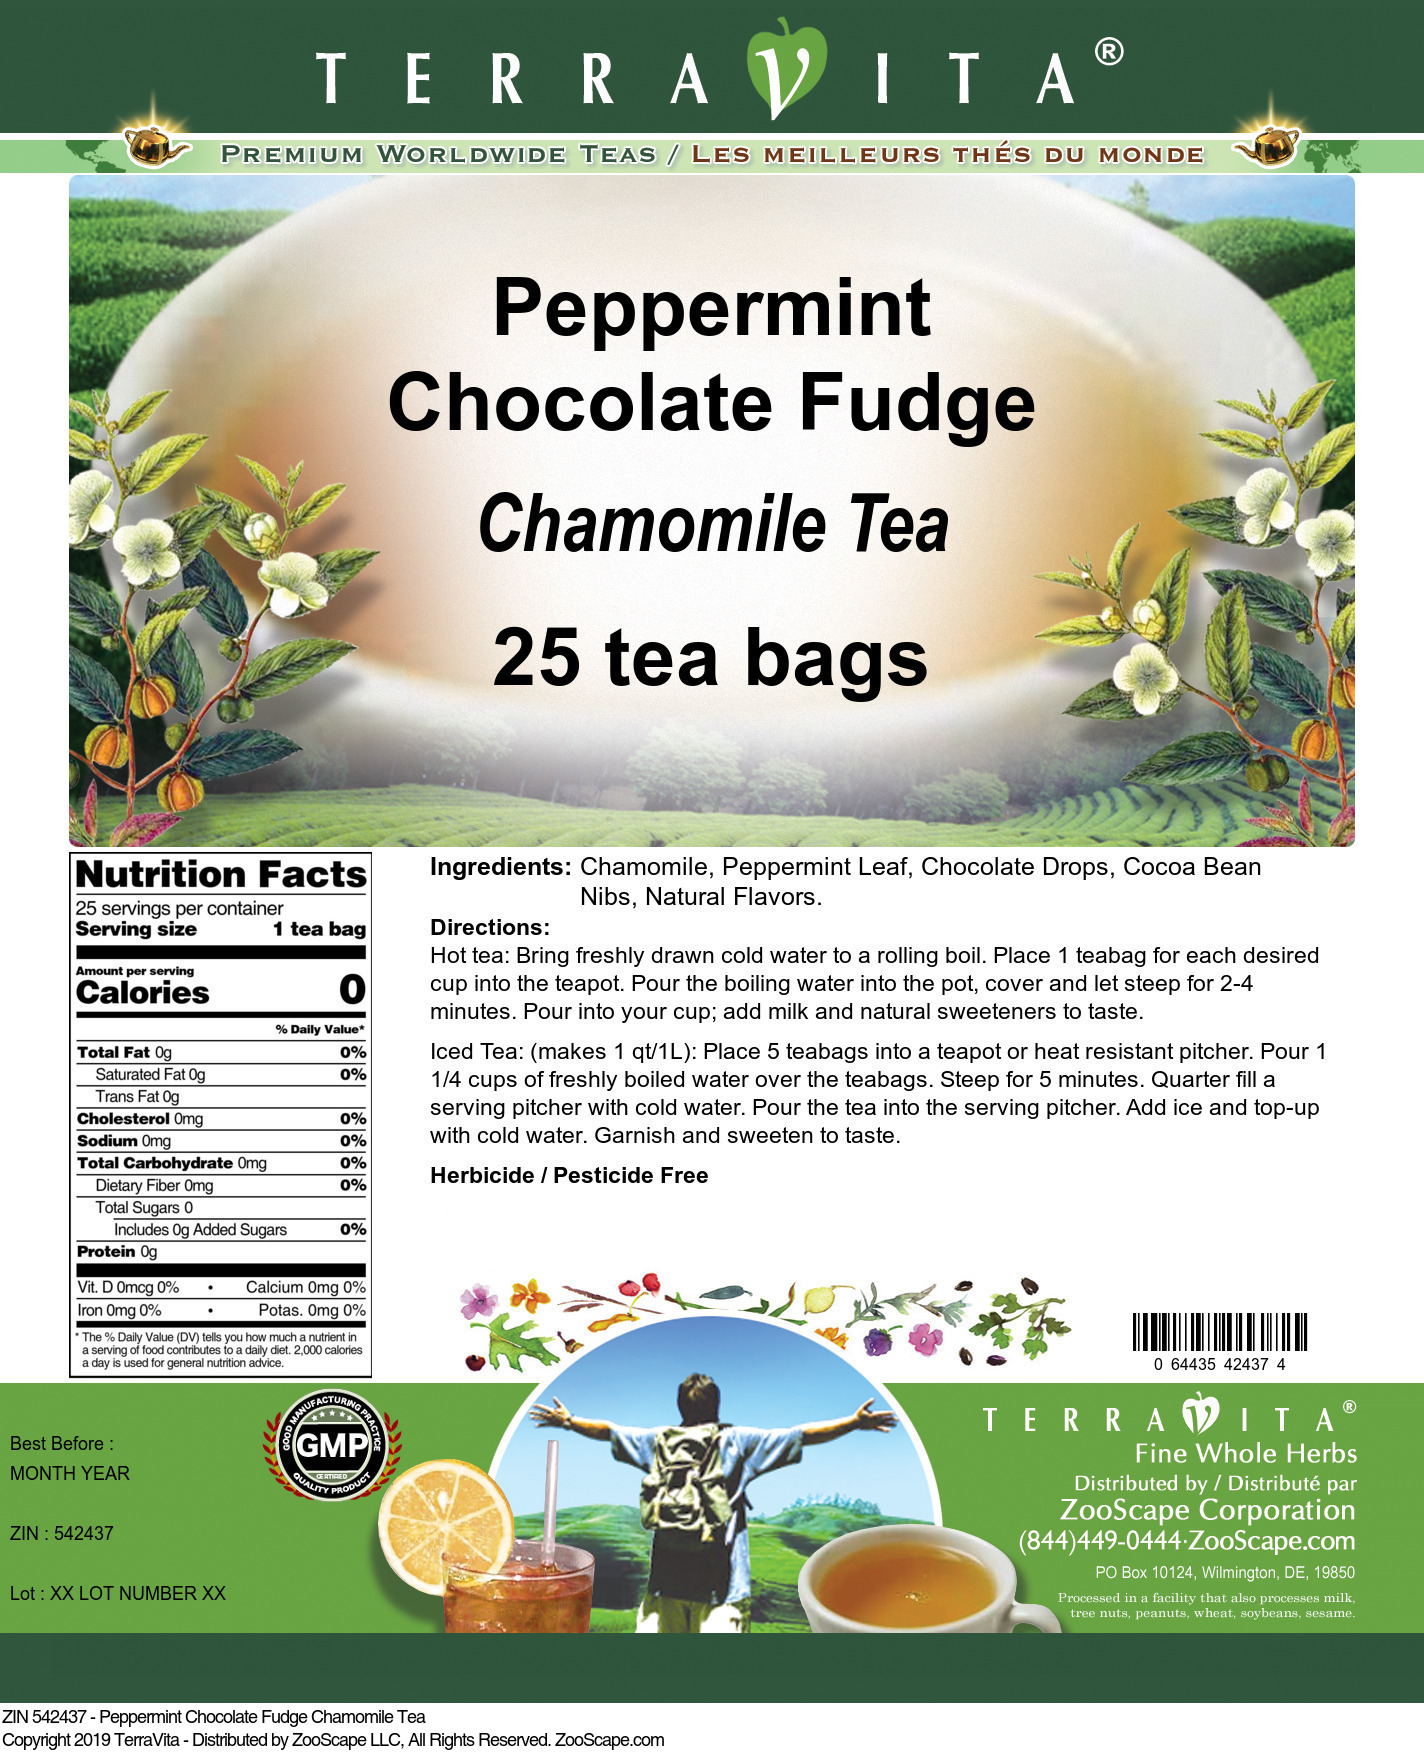 Peppermint Chocolate Fudge Chamomile Tea - Label